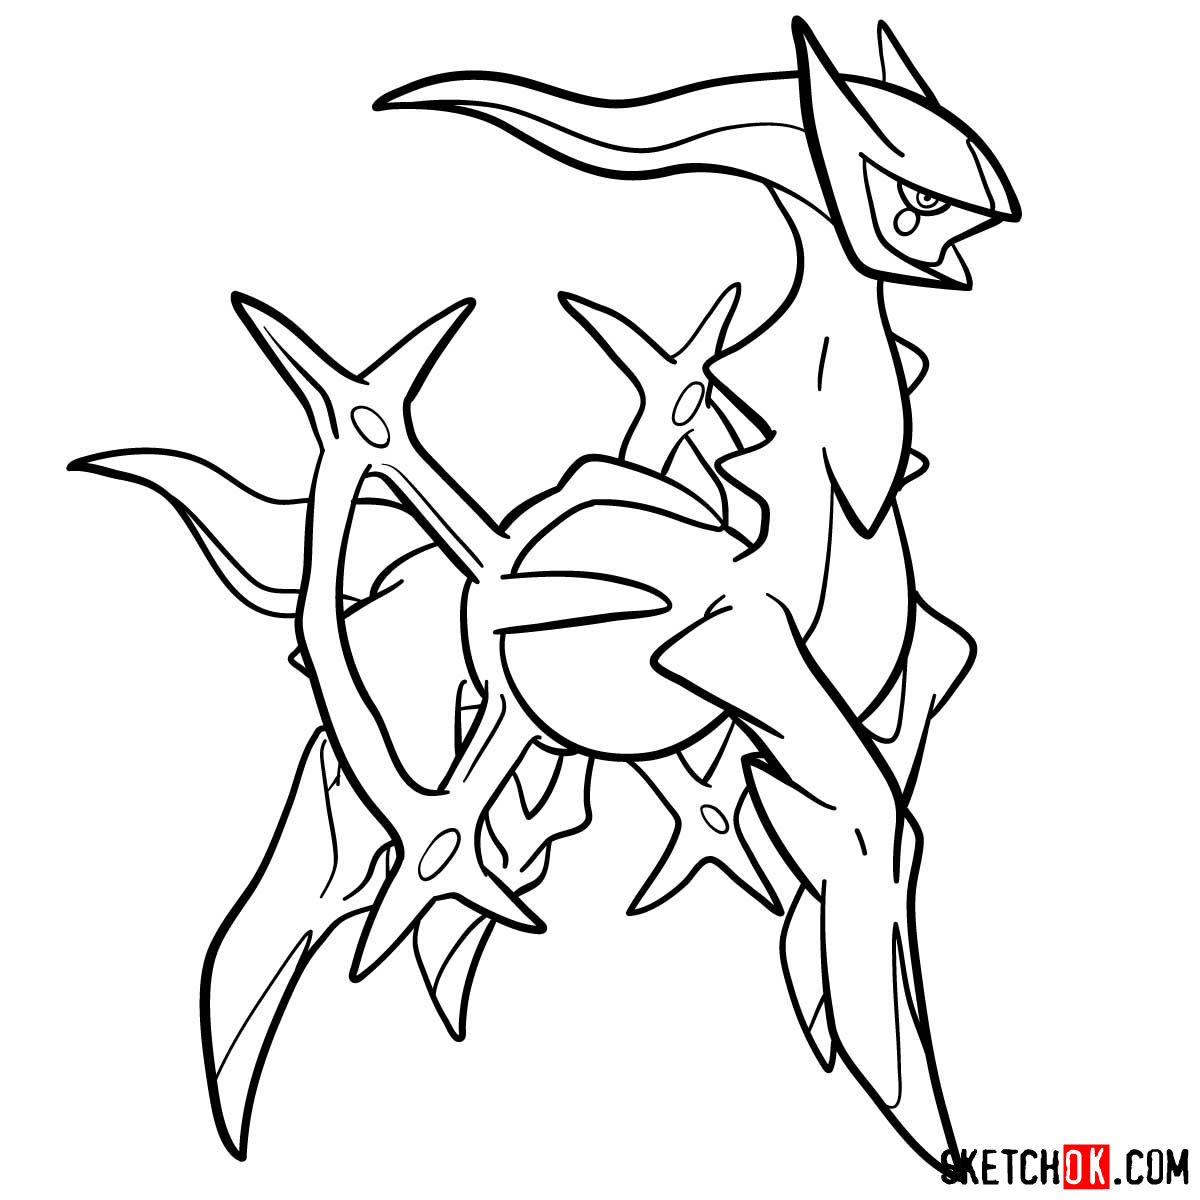 How to draw Arceus Pokemon - step 18